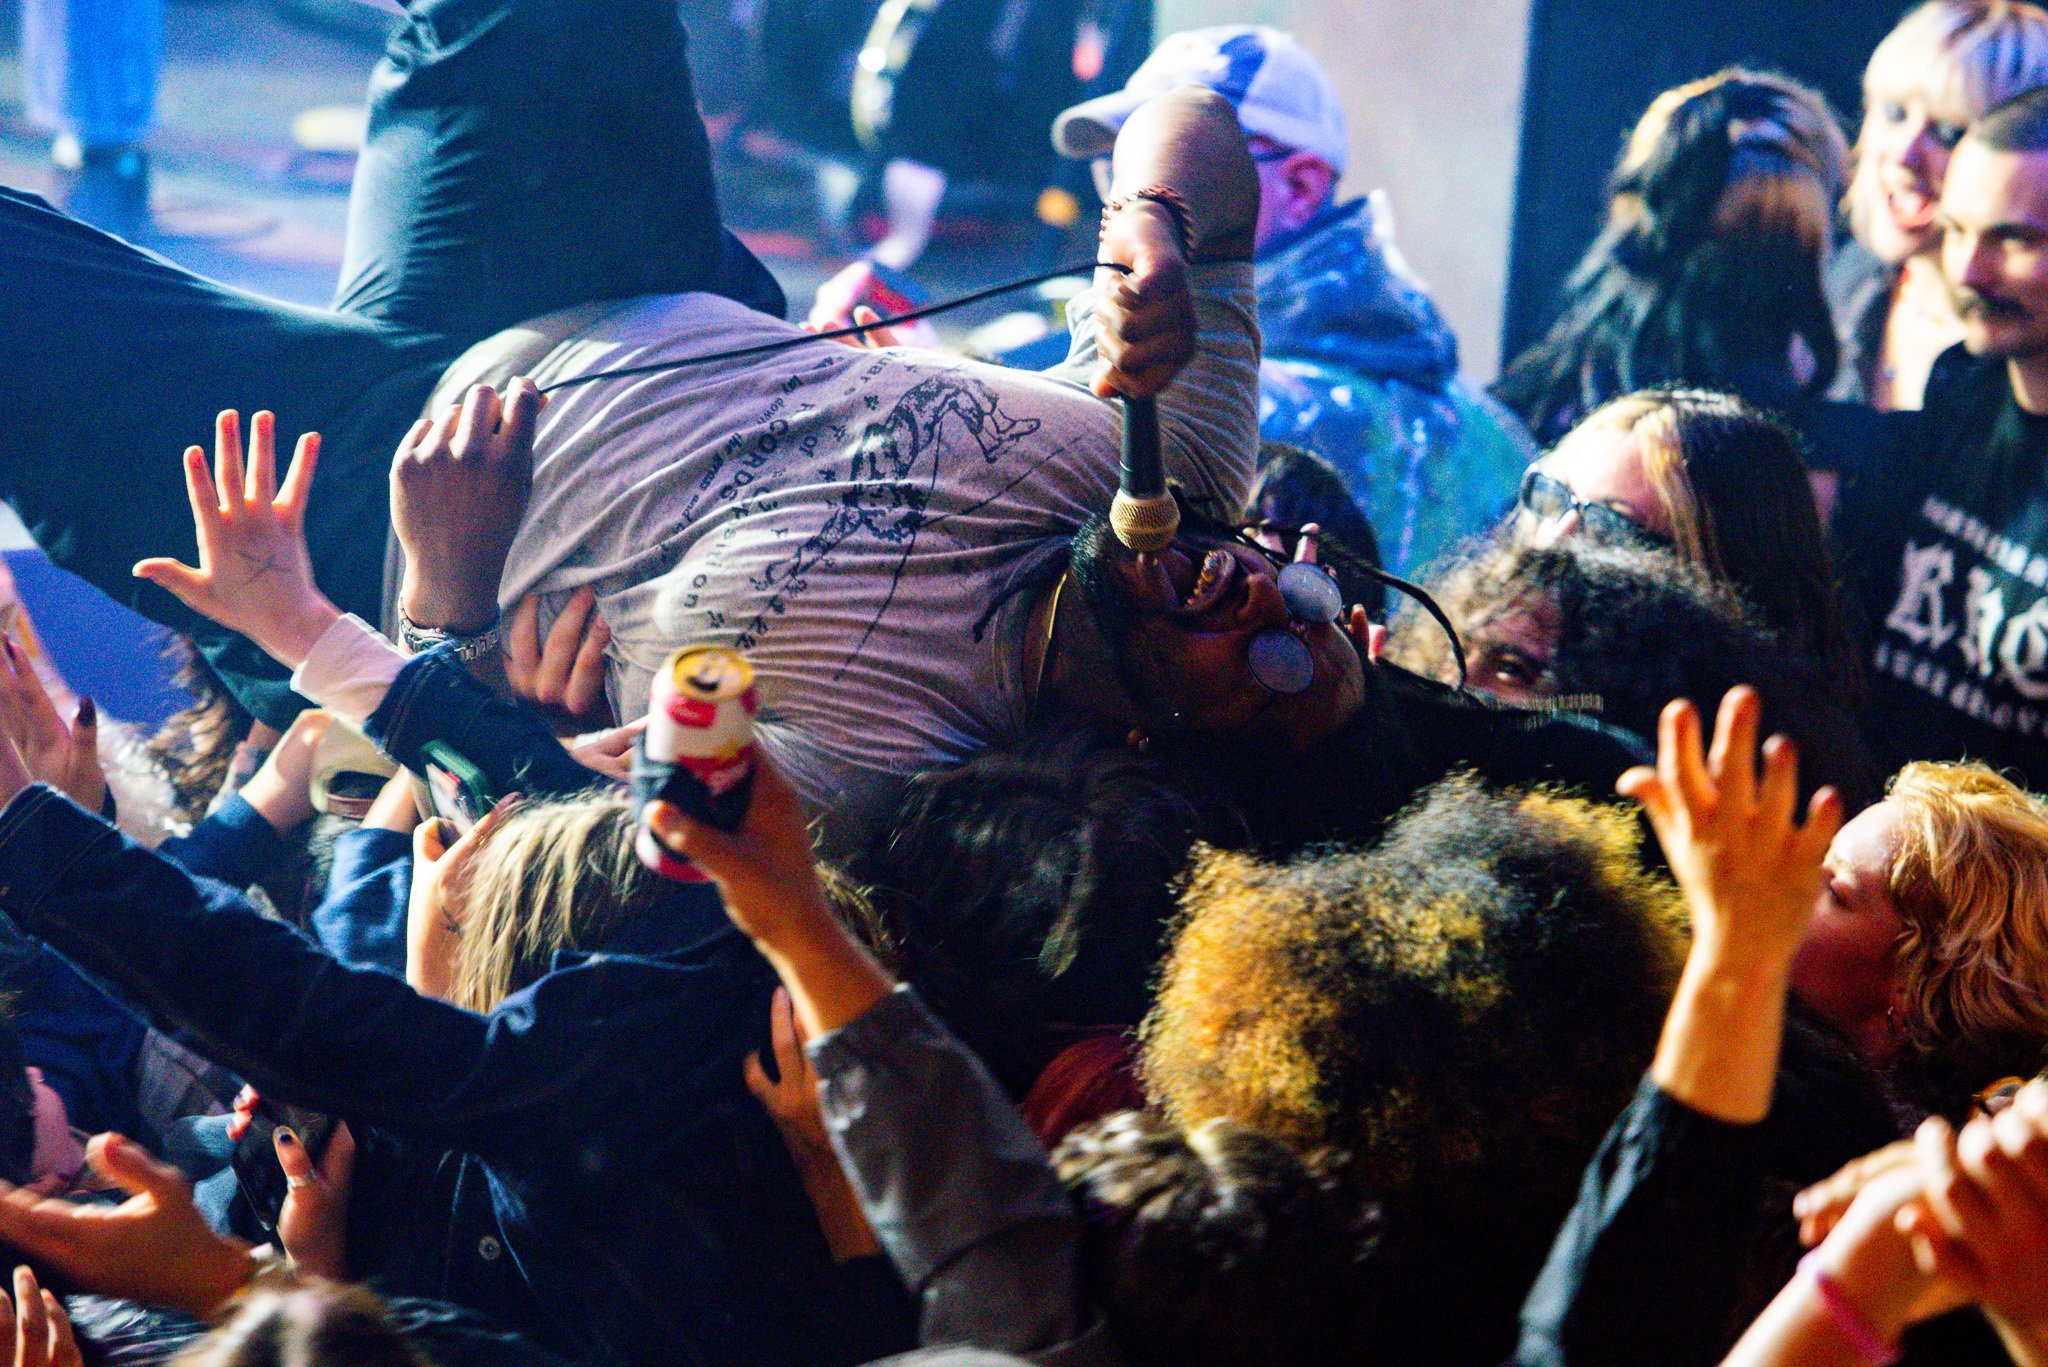  Pierce Jordan, the lead singer of Soul Glo, dives into the crowd.&nbsp; 